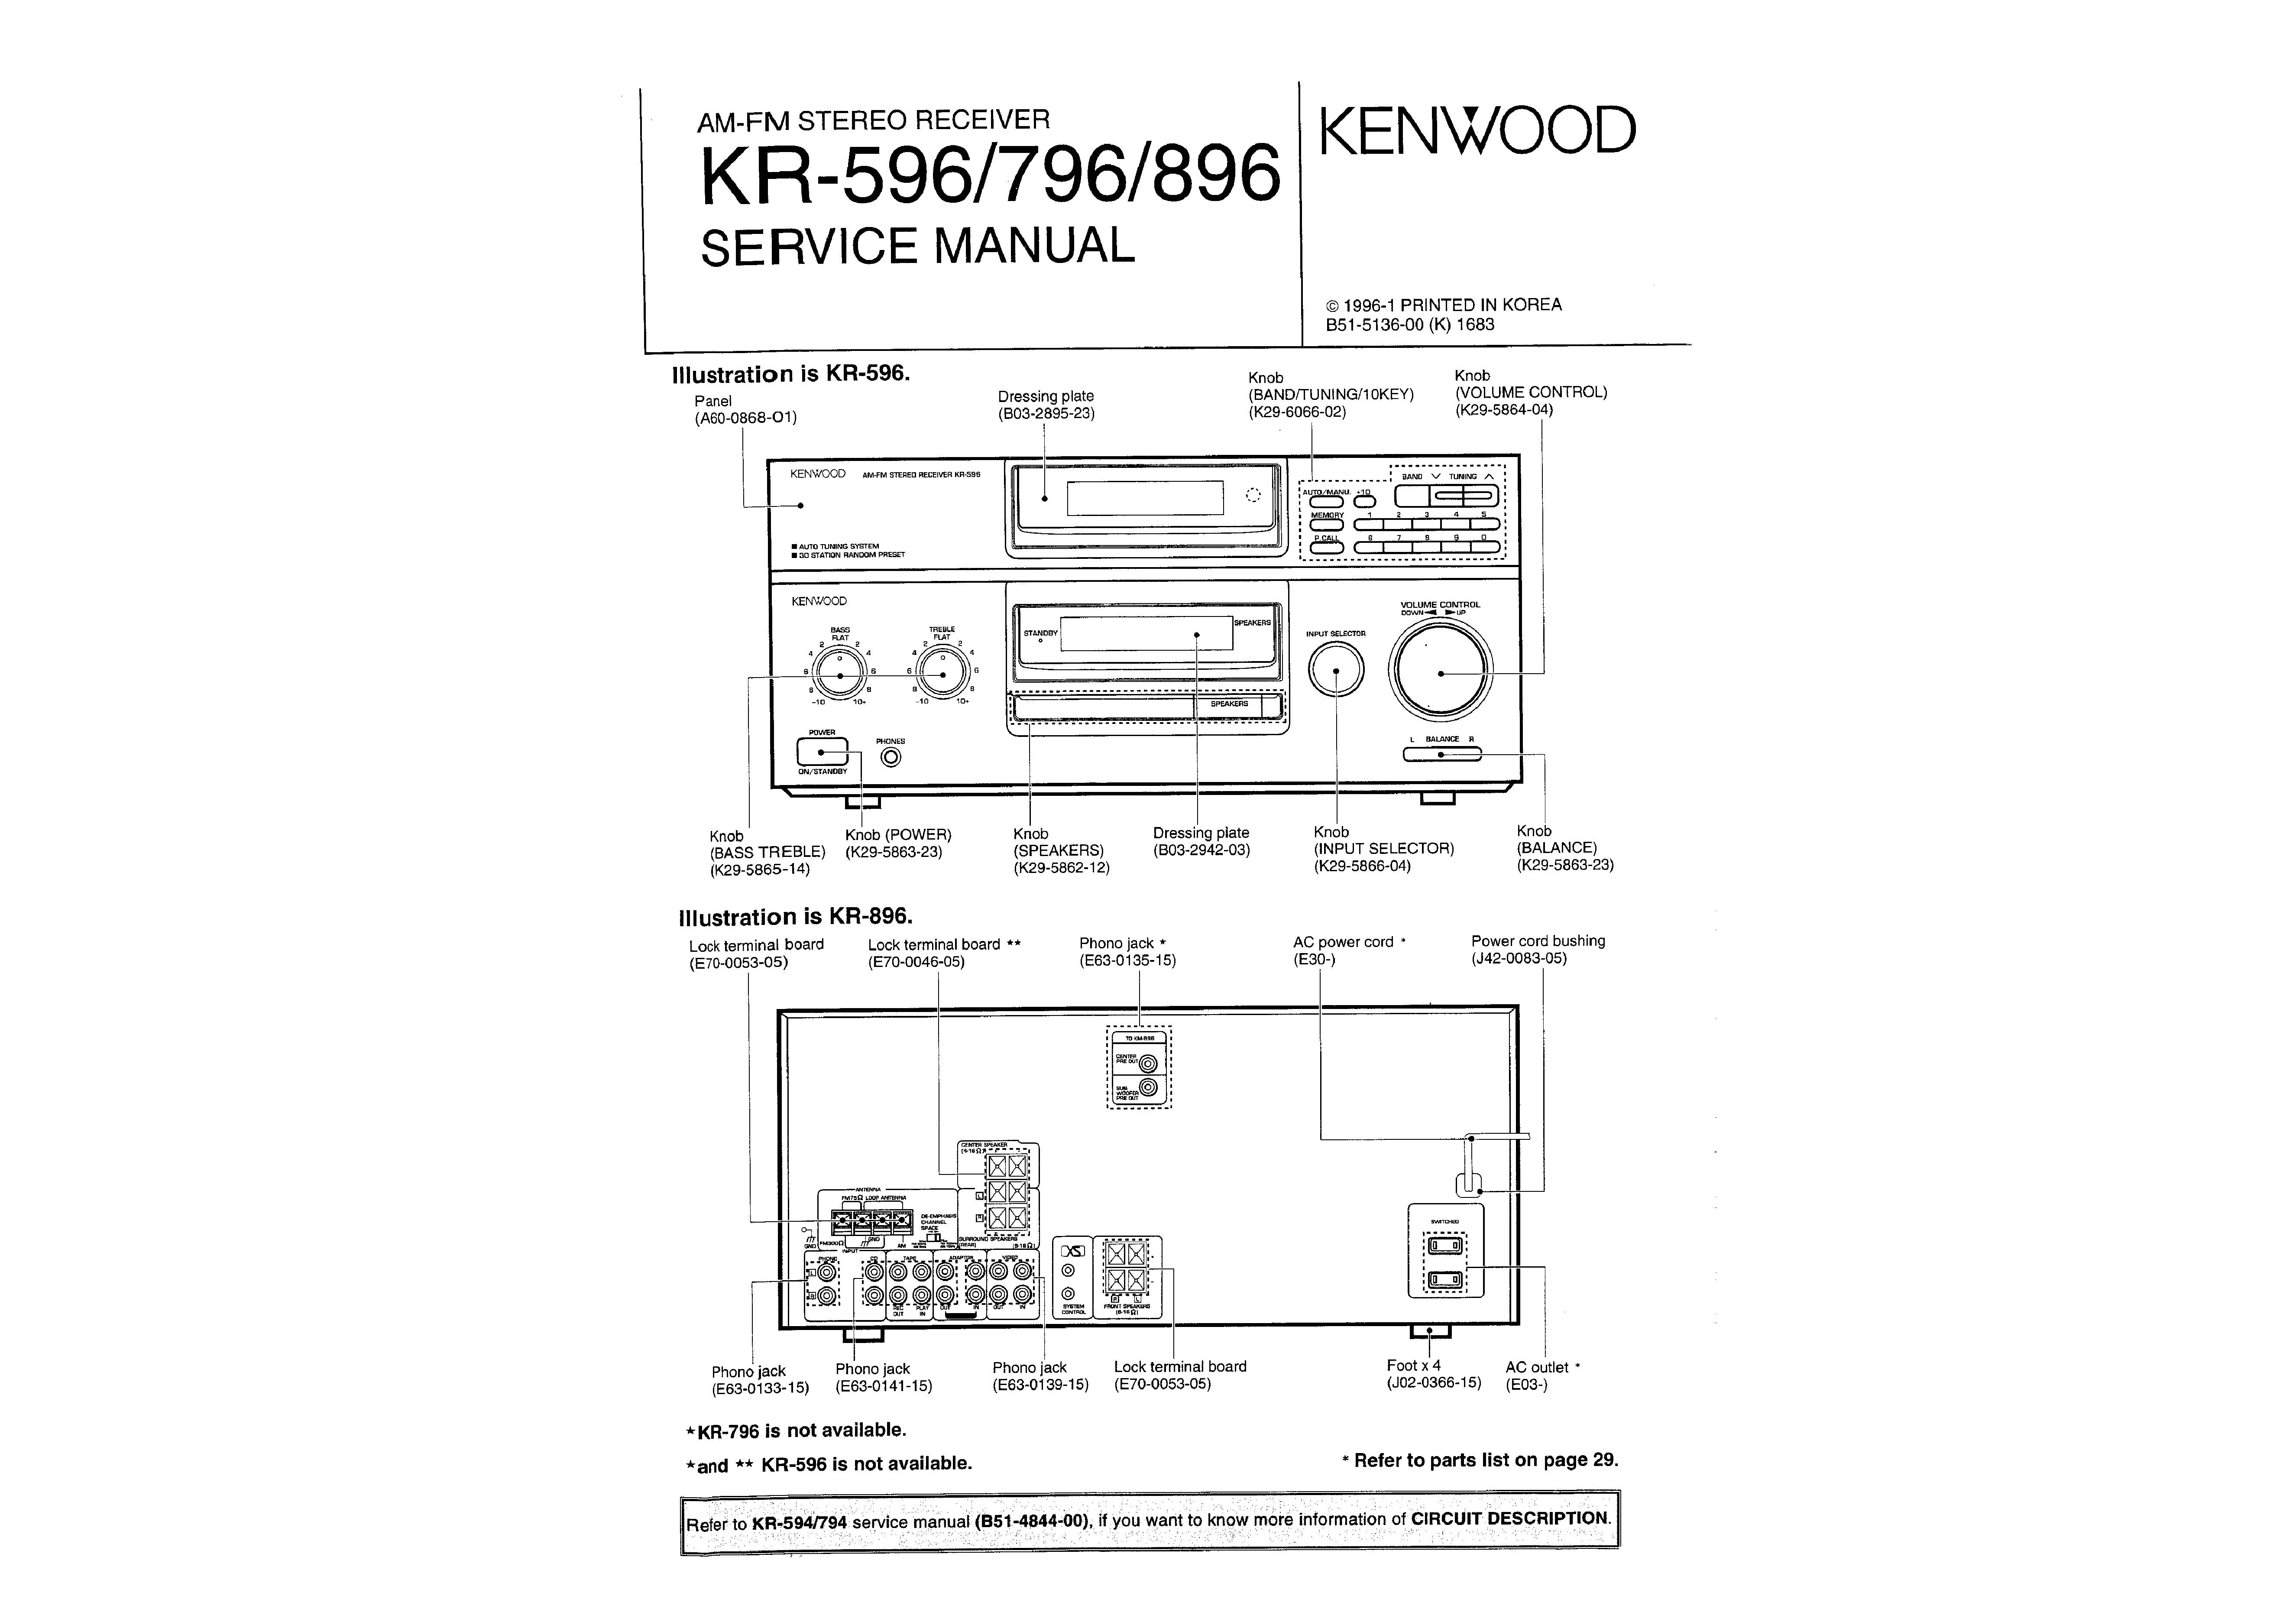 Kenwood KR-596